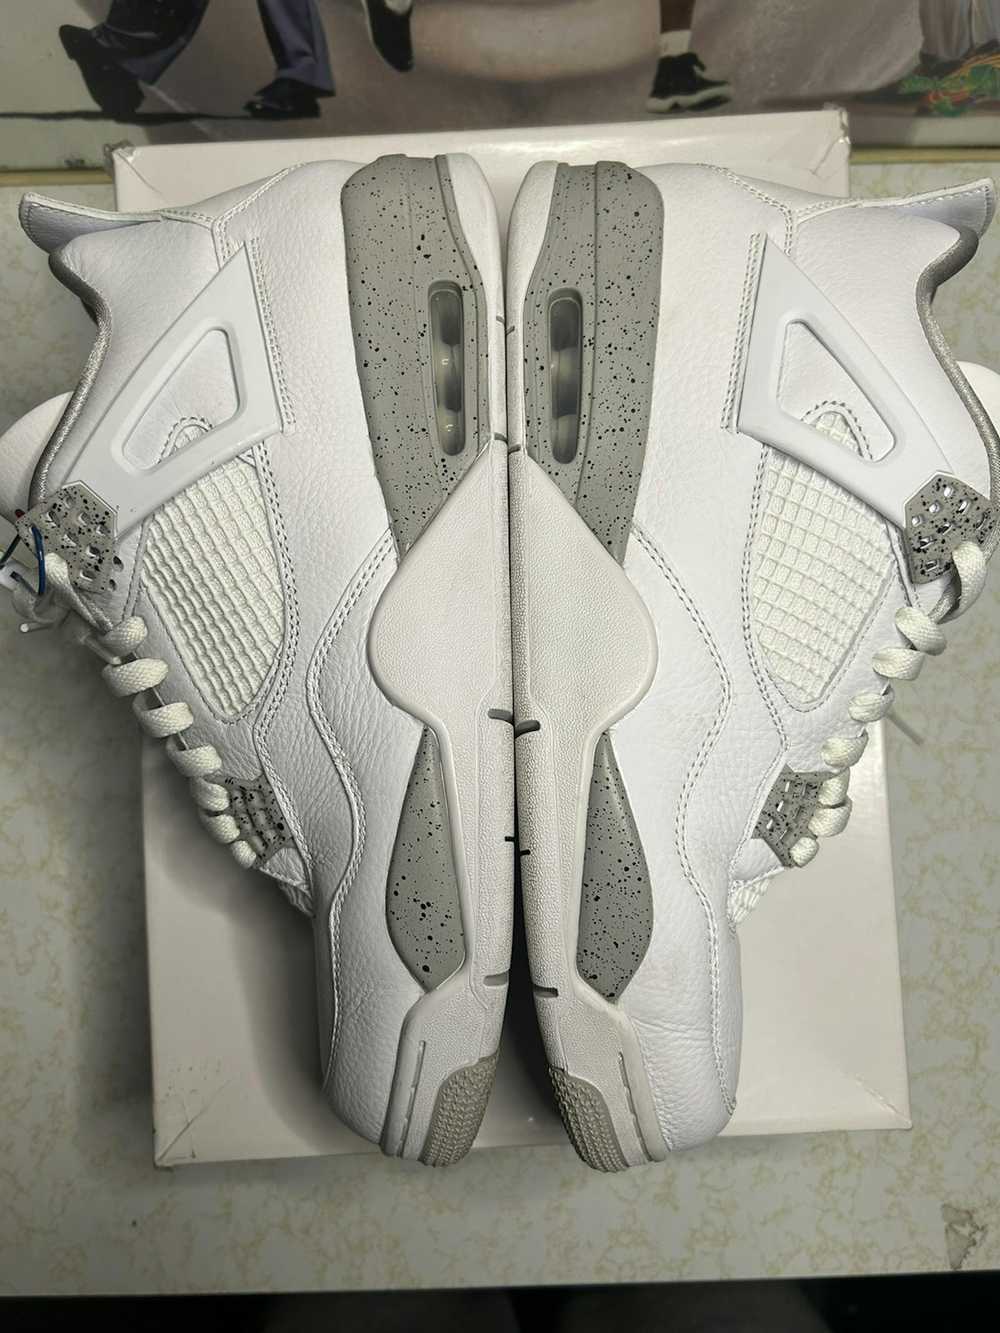 Jordan Brand Jordan Retro 4 ‘white oreo’ - image 3